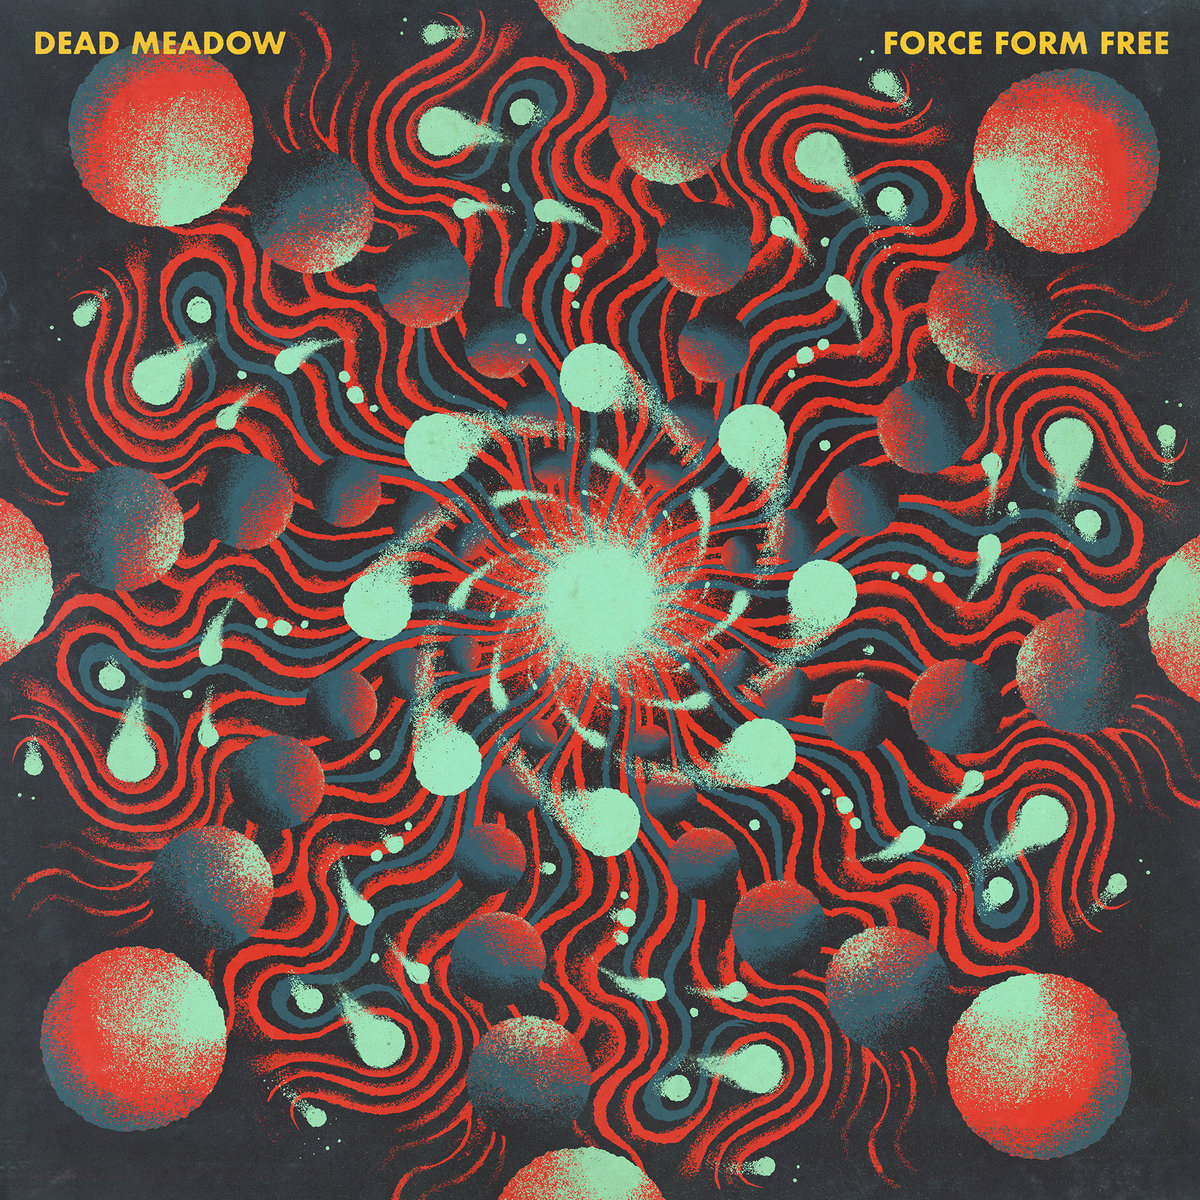 DEAD MEADOW - FORCE FORM FREE (LTD EDITION BLUE VINYL) - LP